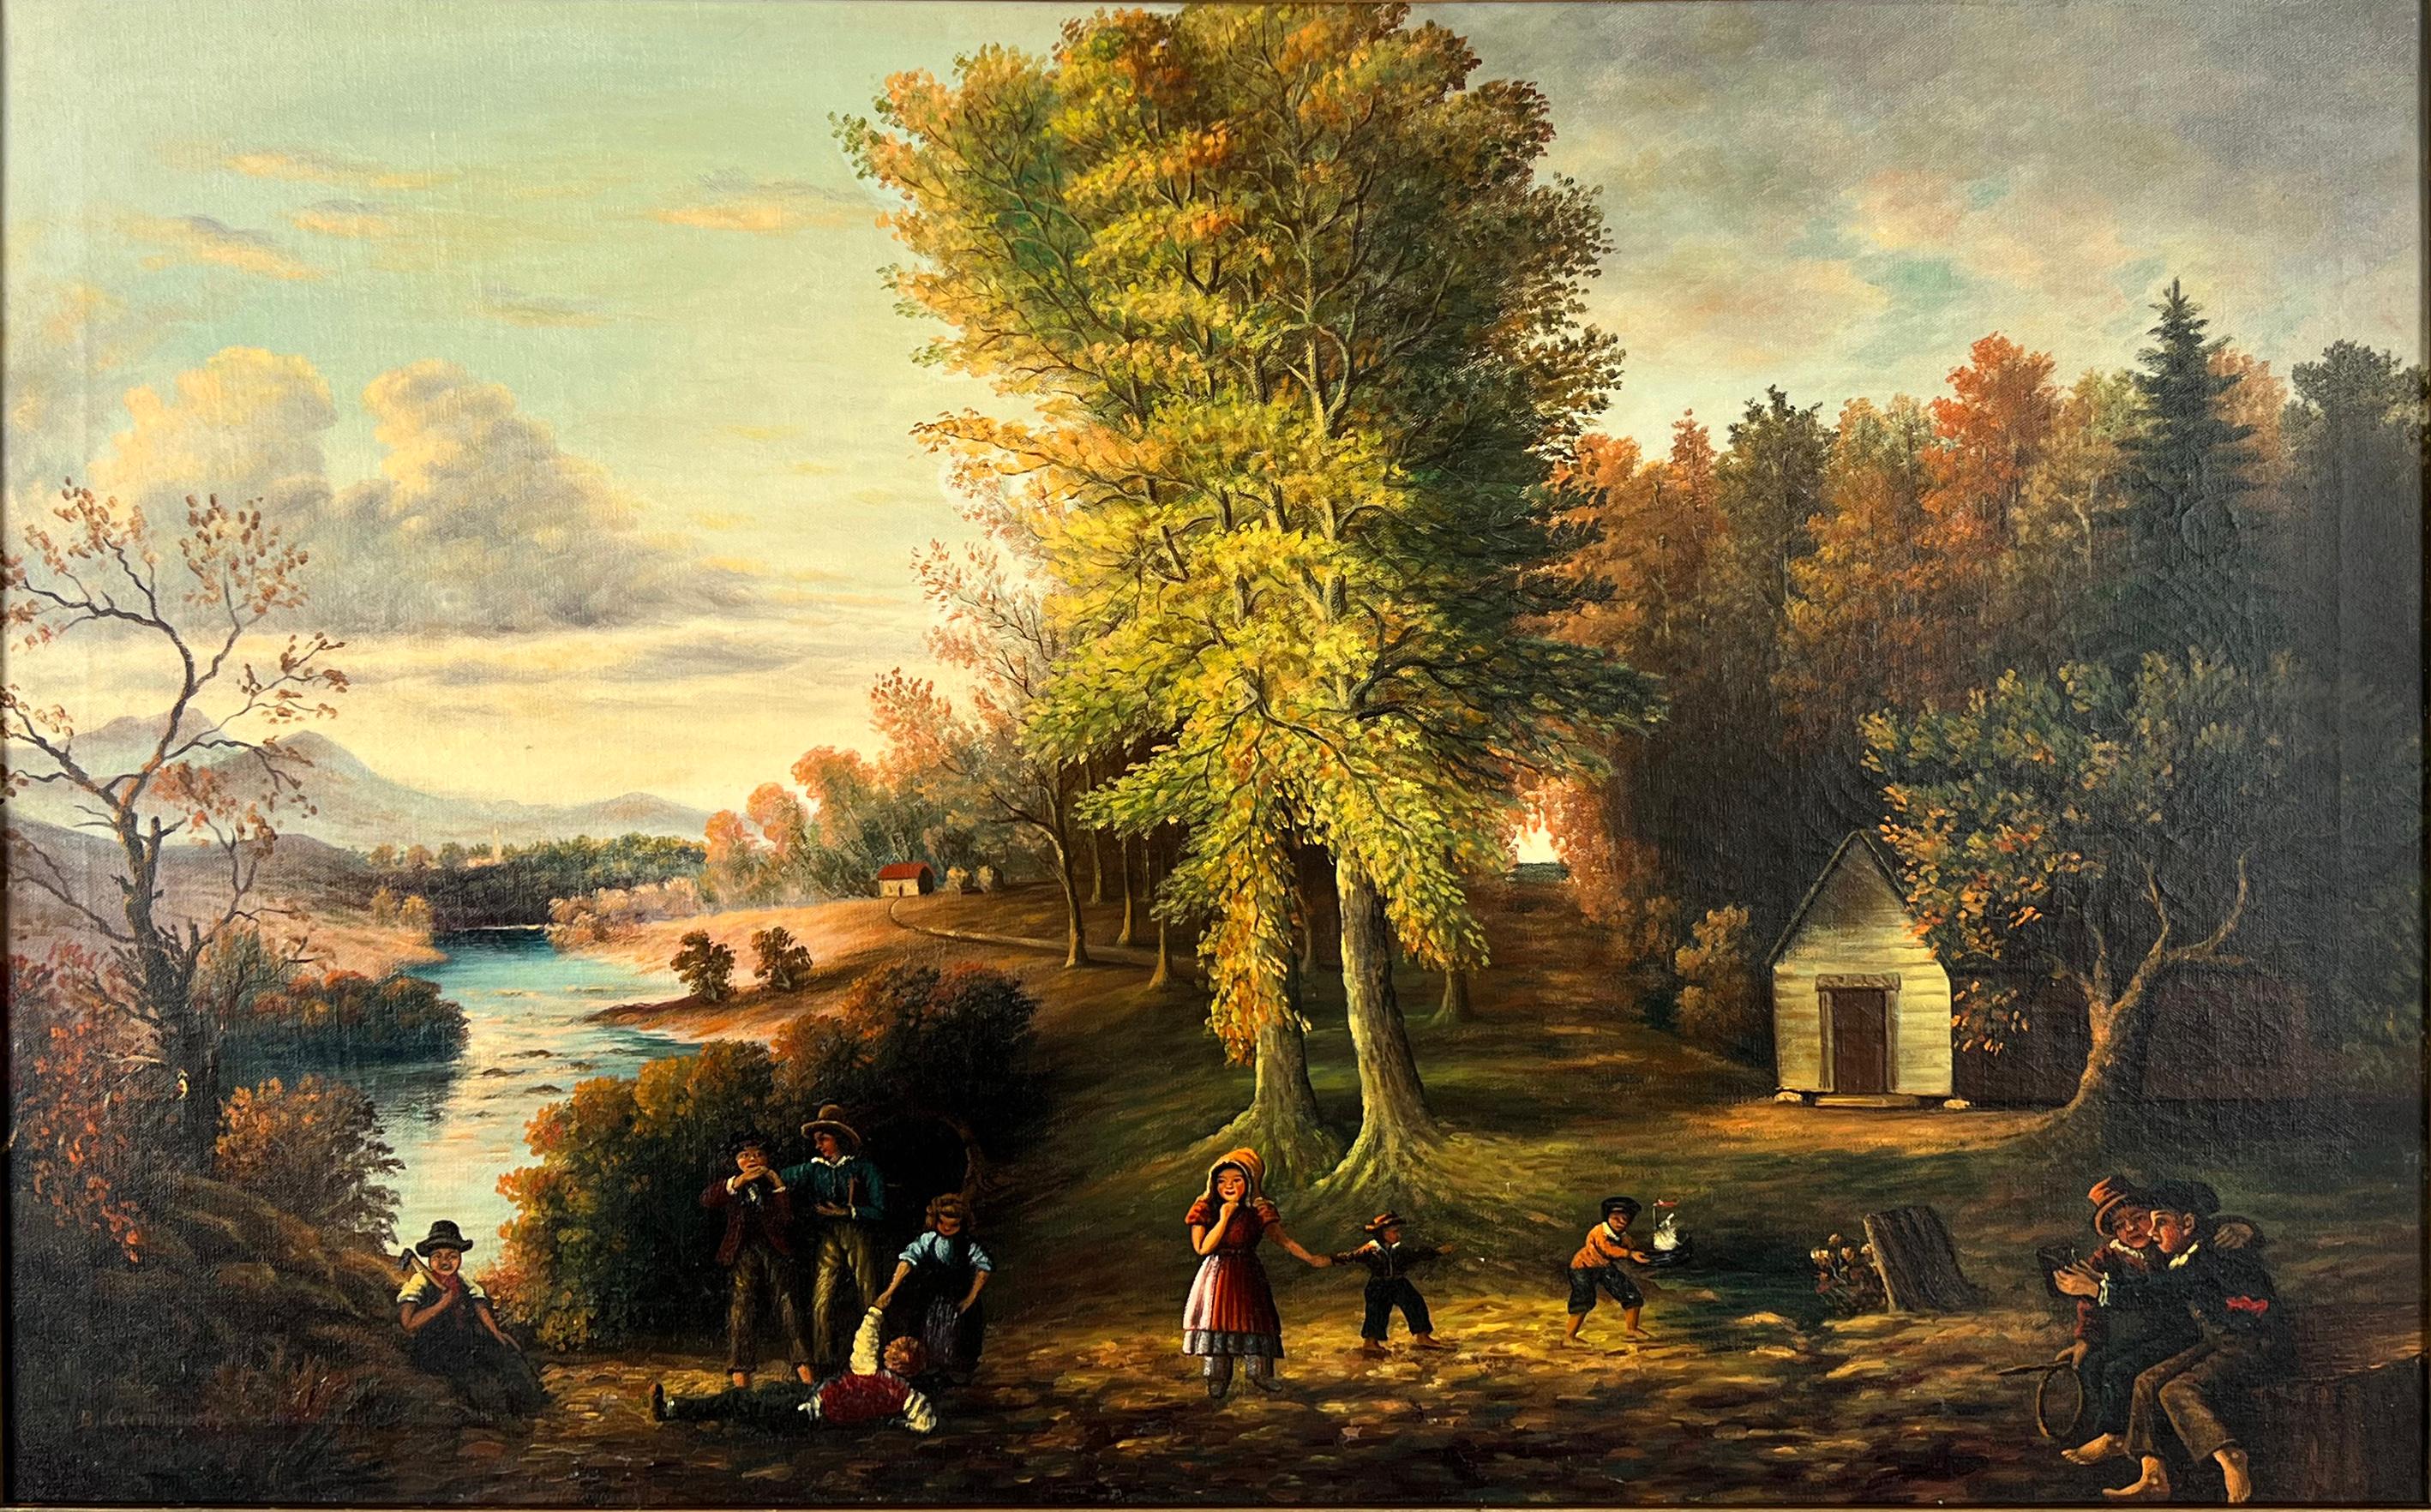 Evening Time New York Hudson River School Scene Oil on Canvas Ornate Frame - Painting by B. Czerniawski